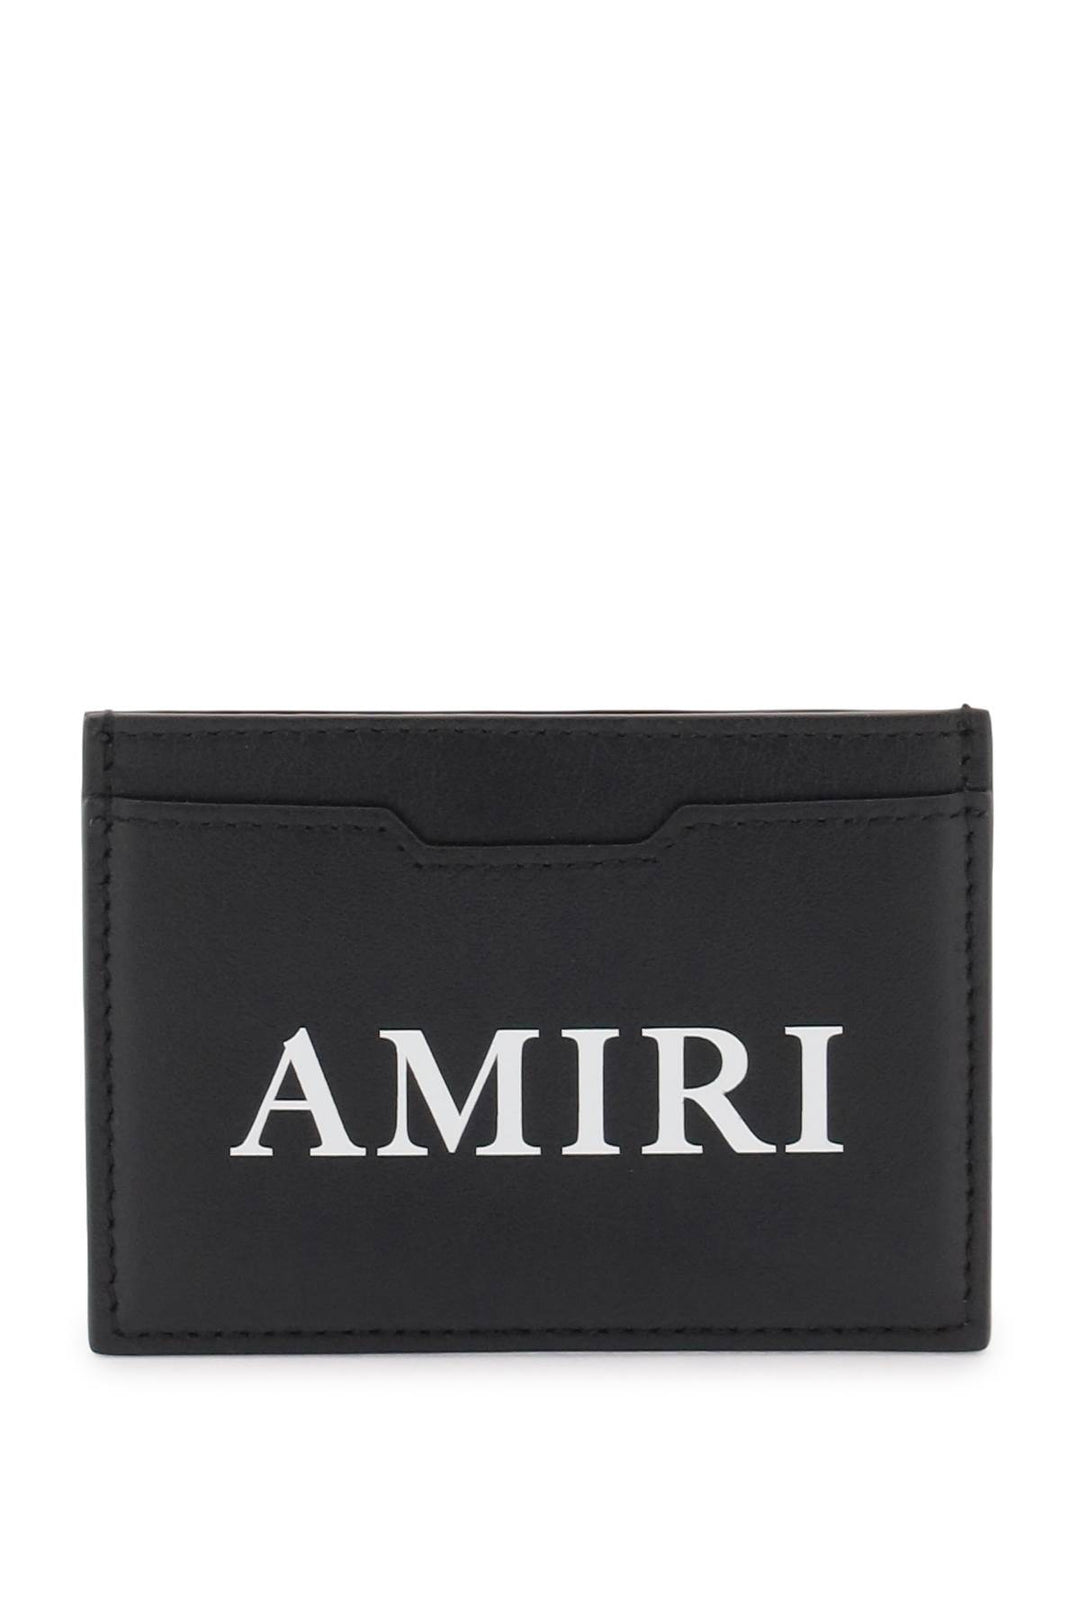 Amiri Logo Cardholder   Nero